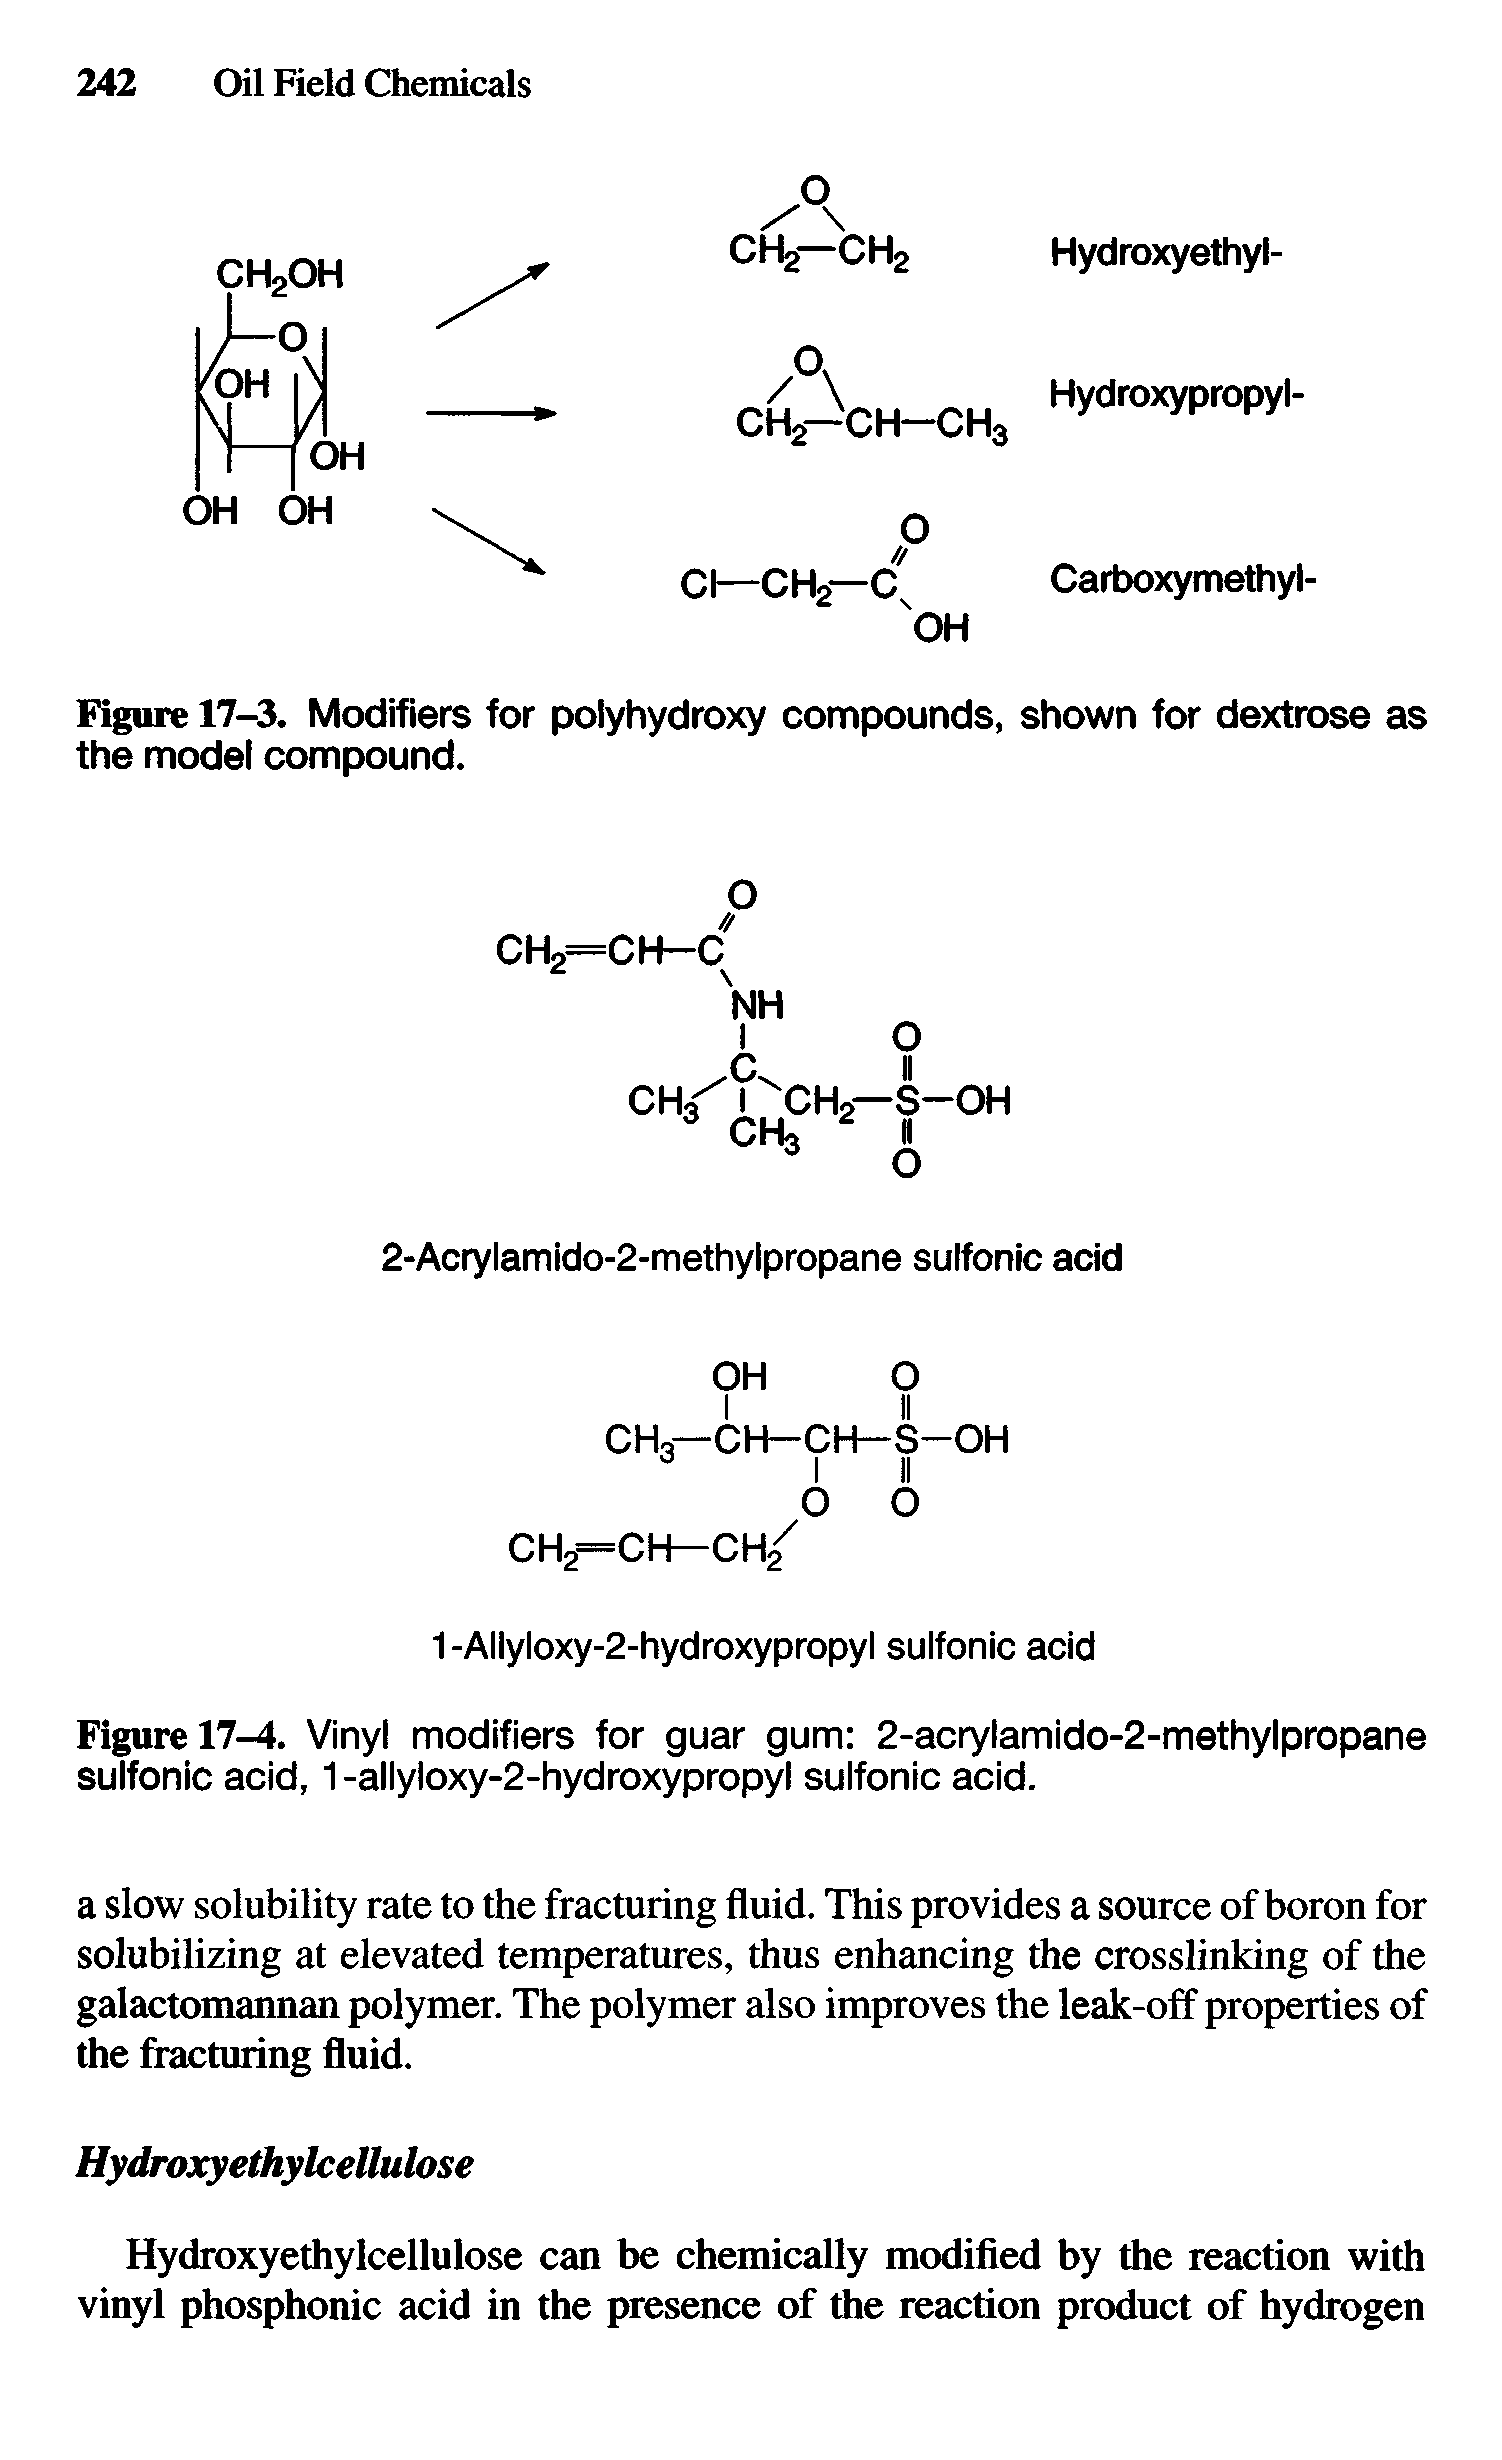 Figure 17-4. Vinyl modifiers for guar gum 2-acrylamido-2-methylpropane sulfonic acid, 1 -allyloxy-2-hydroxypropyl sulfonic acid.